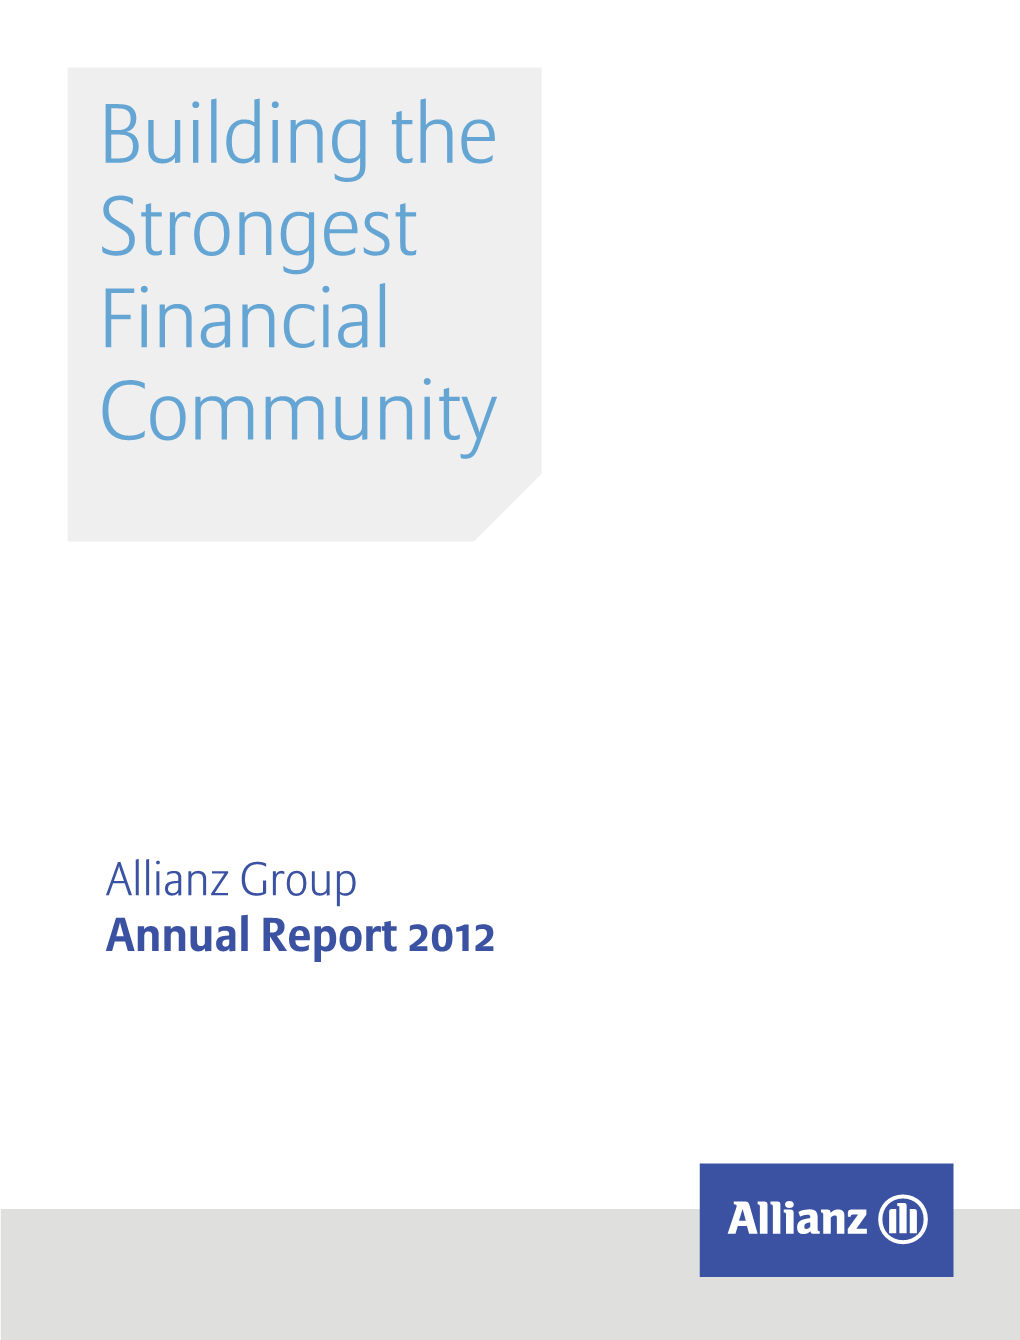 Annual Report Allianz Group